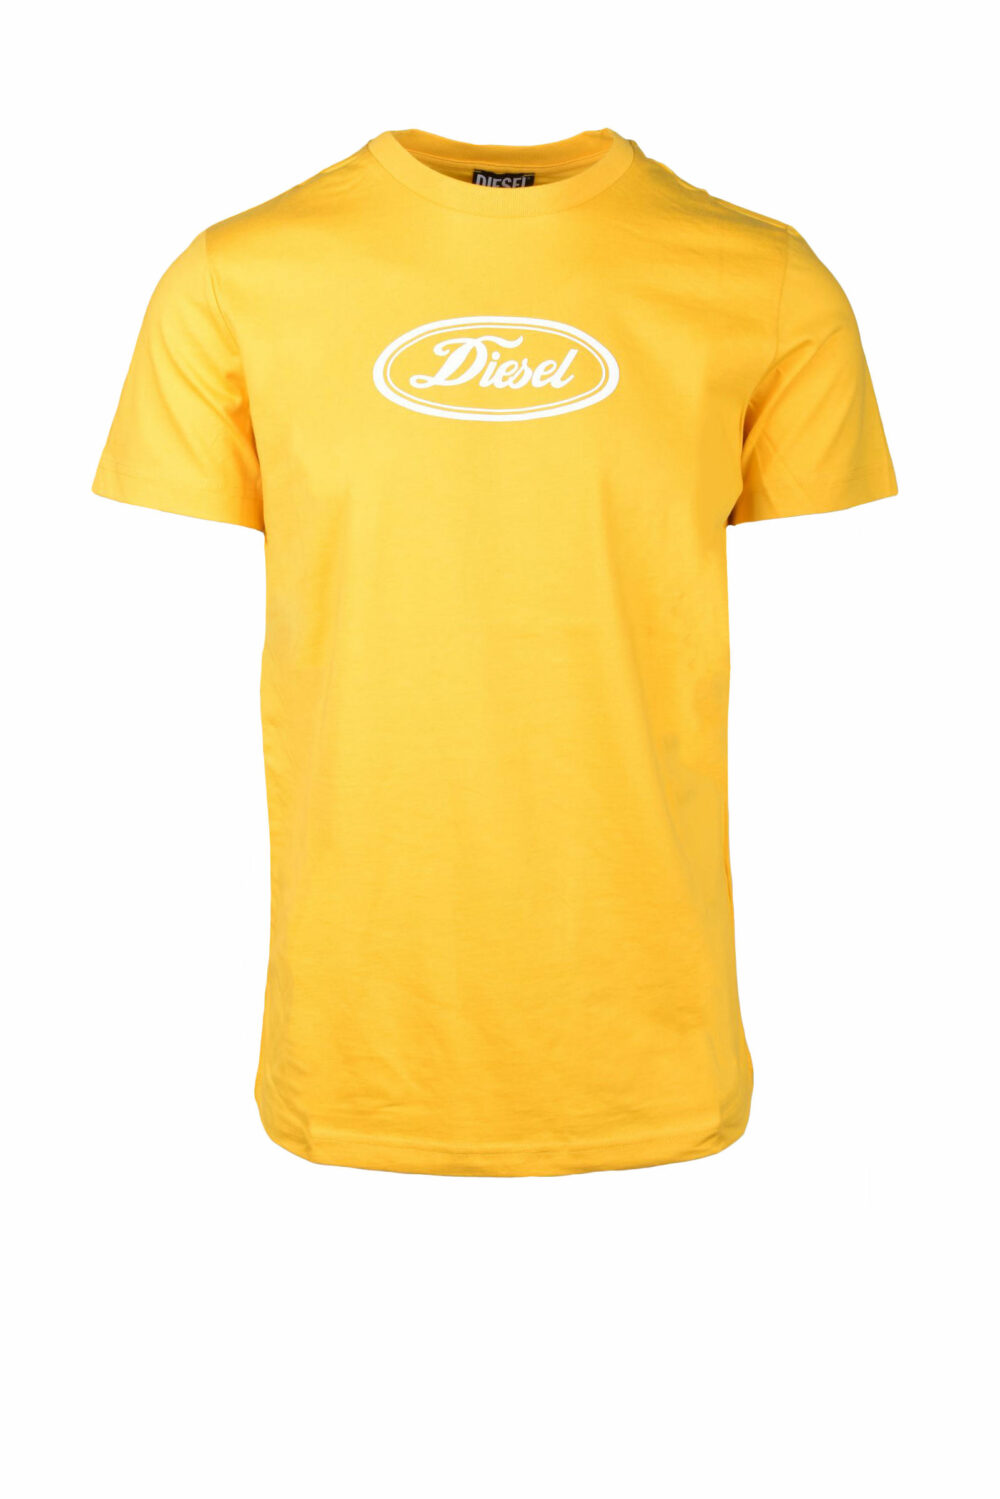 T-shirt Diesel Giallo - Foto 1